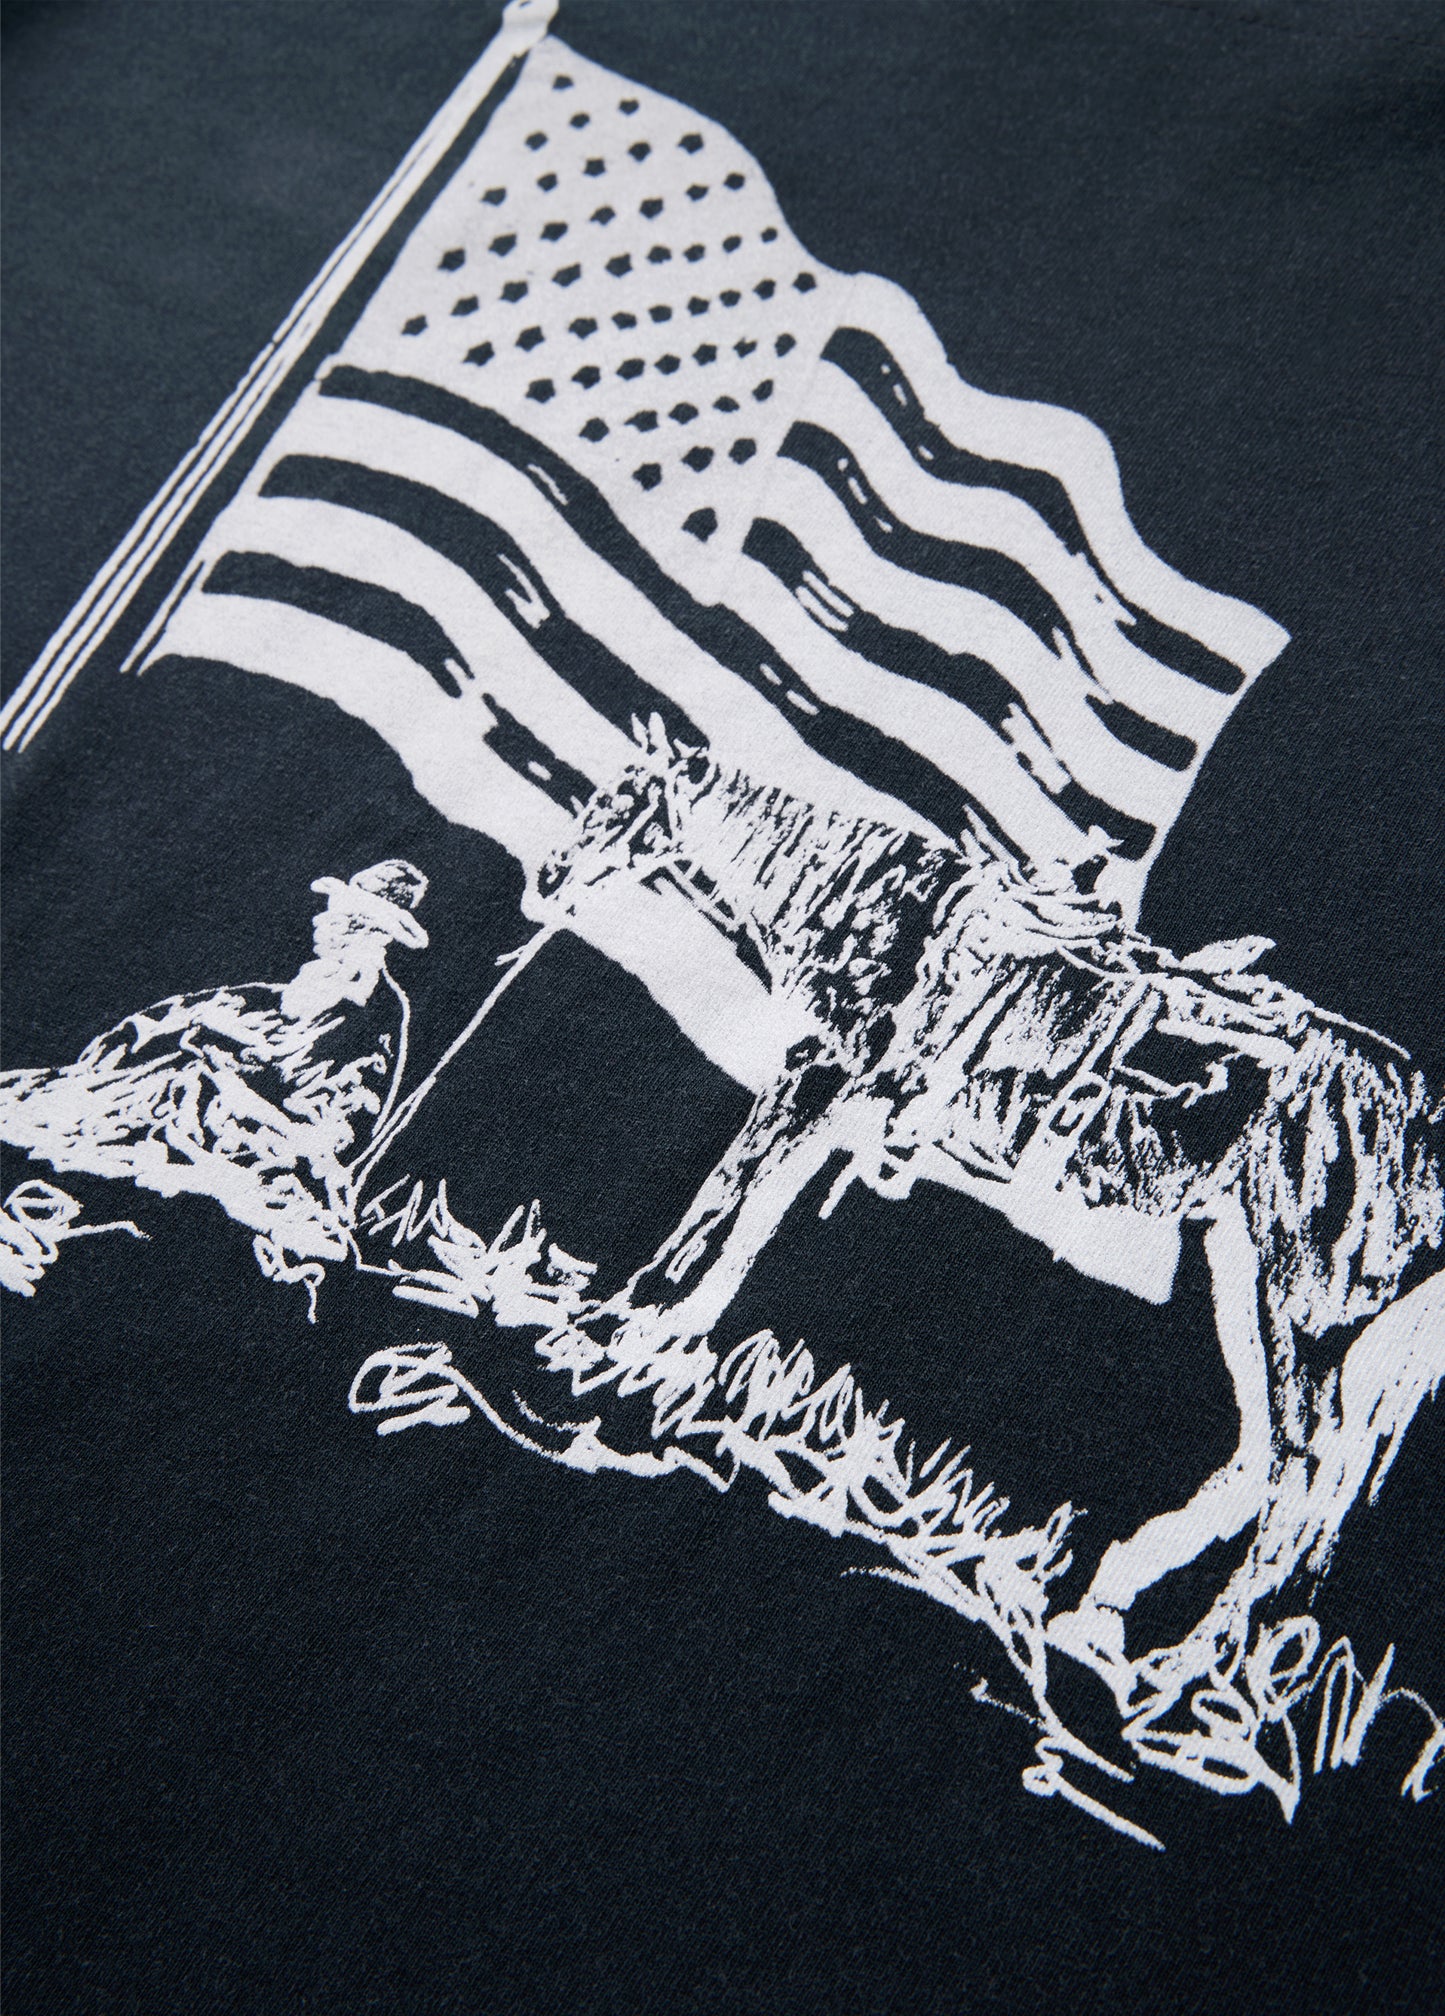 American Flag Cowboy Longsleeve Shirt | Washed Black